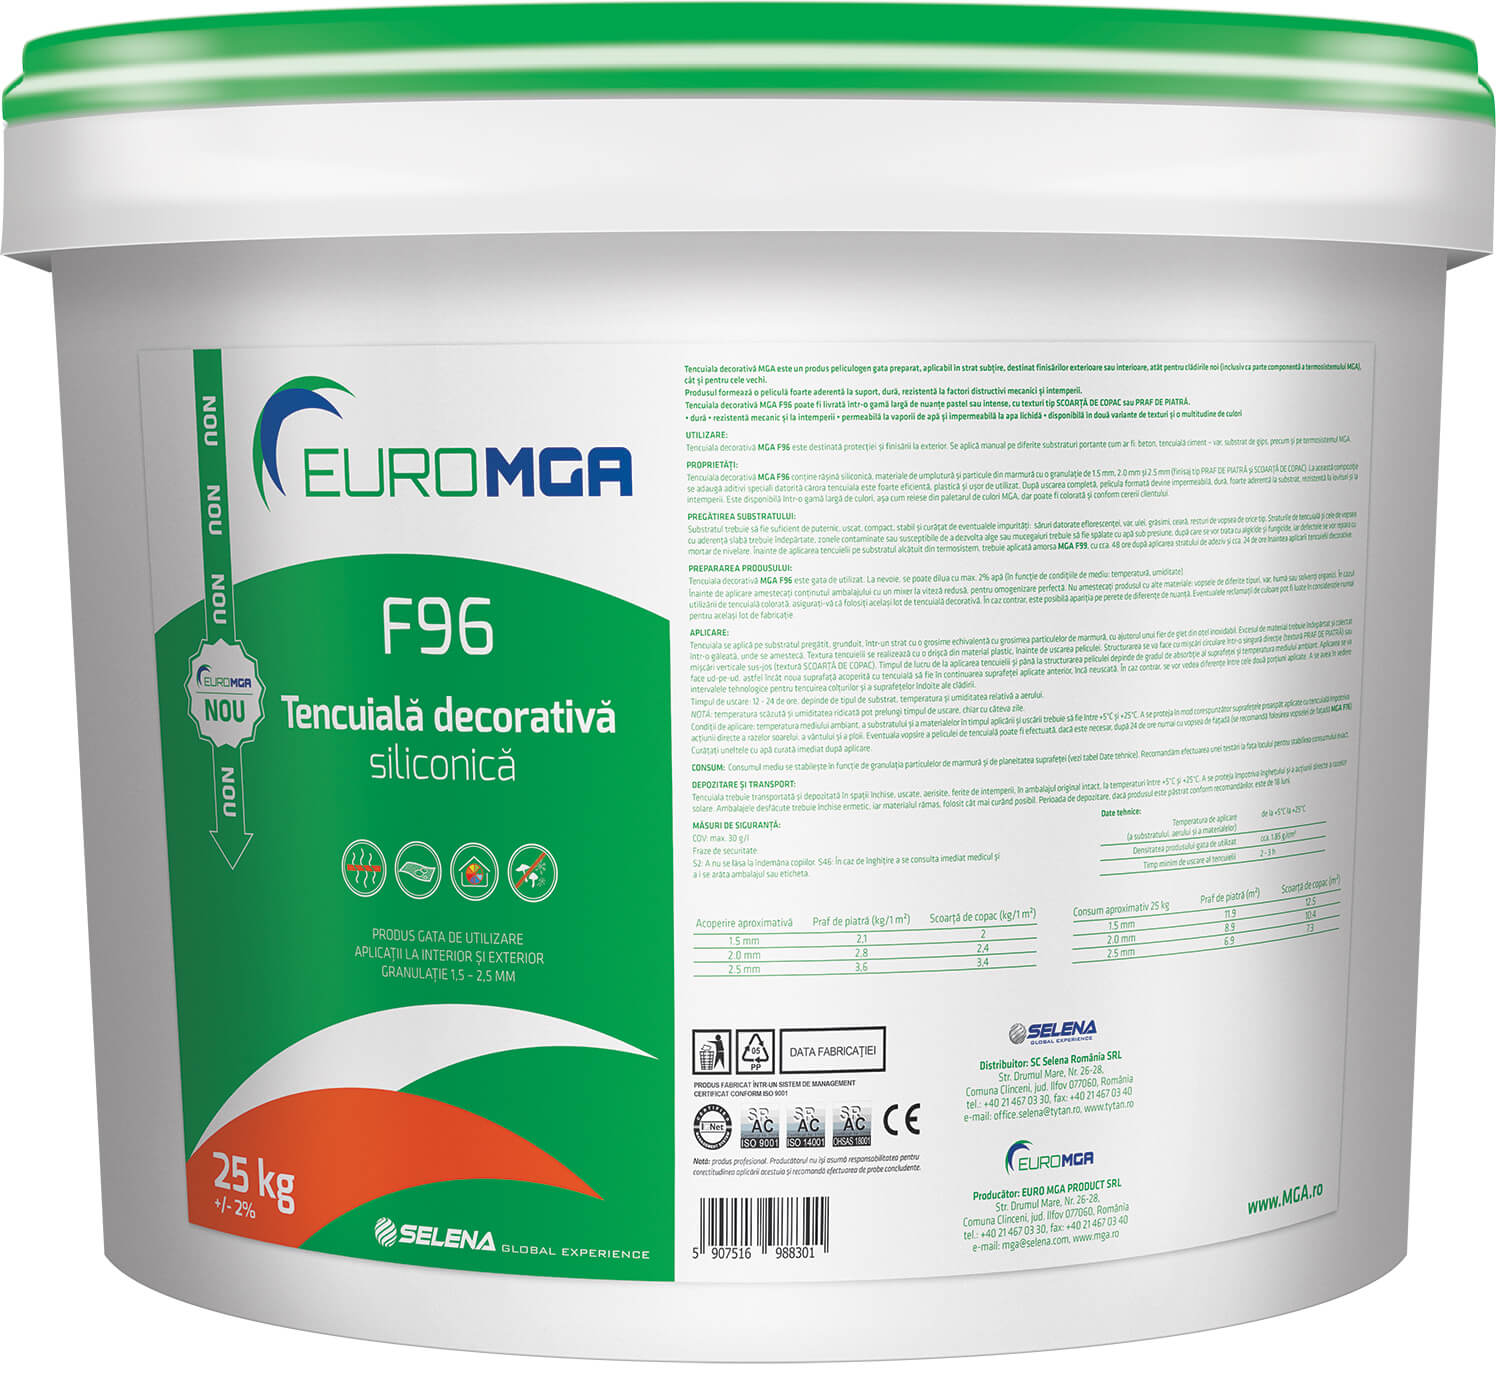 Decorative plasters - Decorative silicone plaster F96 EuroMGA K20 (color code 0631) 25KG, https:maxbau.ro